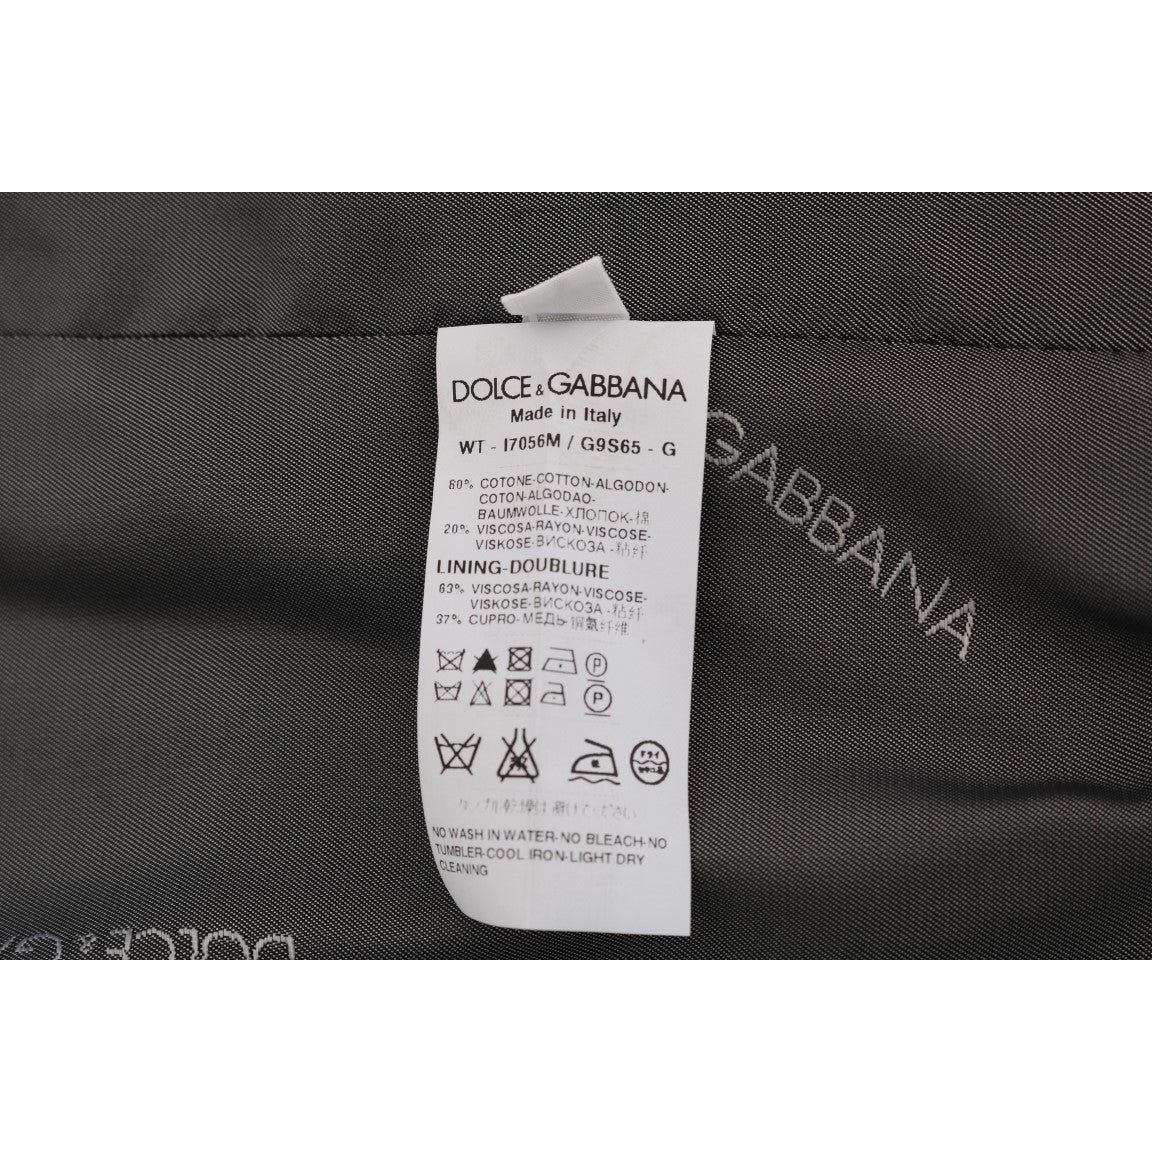 Dolce & Gabbana Elegant Gray Striped Waistcoat Vest gray-staff-cotton-striped-vest-1 478457-gray-staff-cotton-striped-vest-2-6.jpg